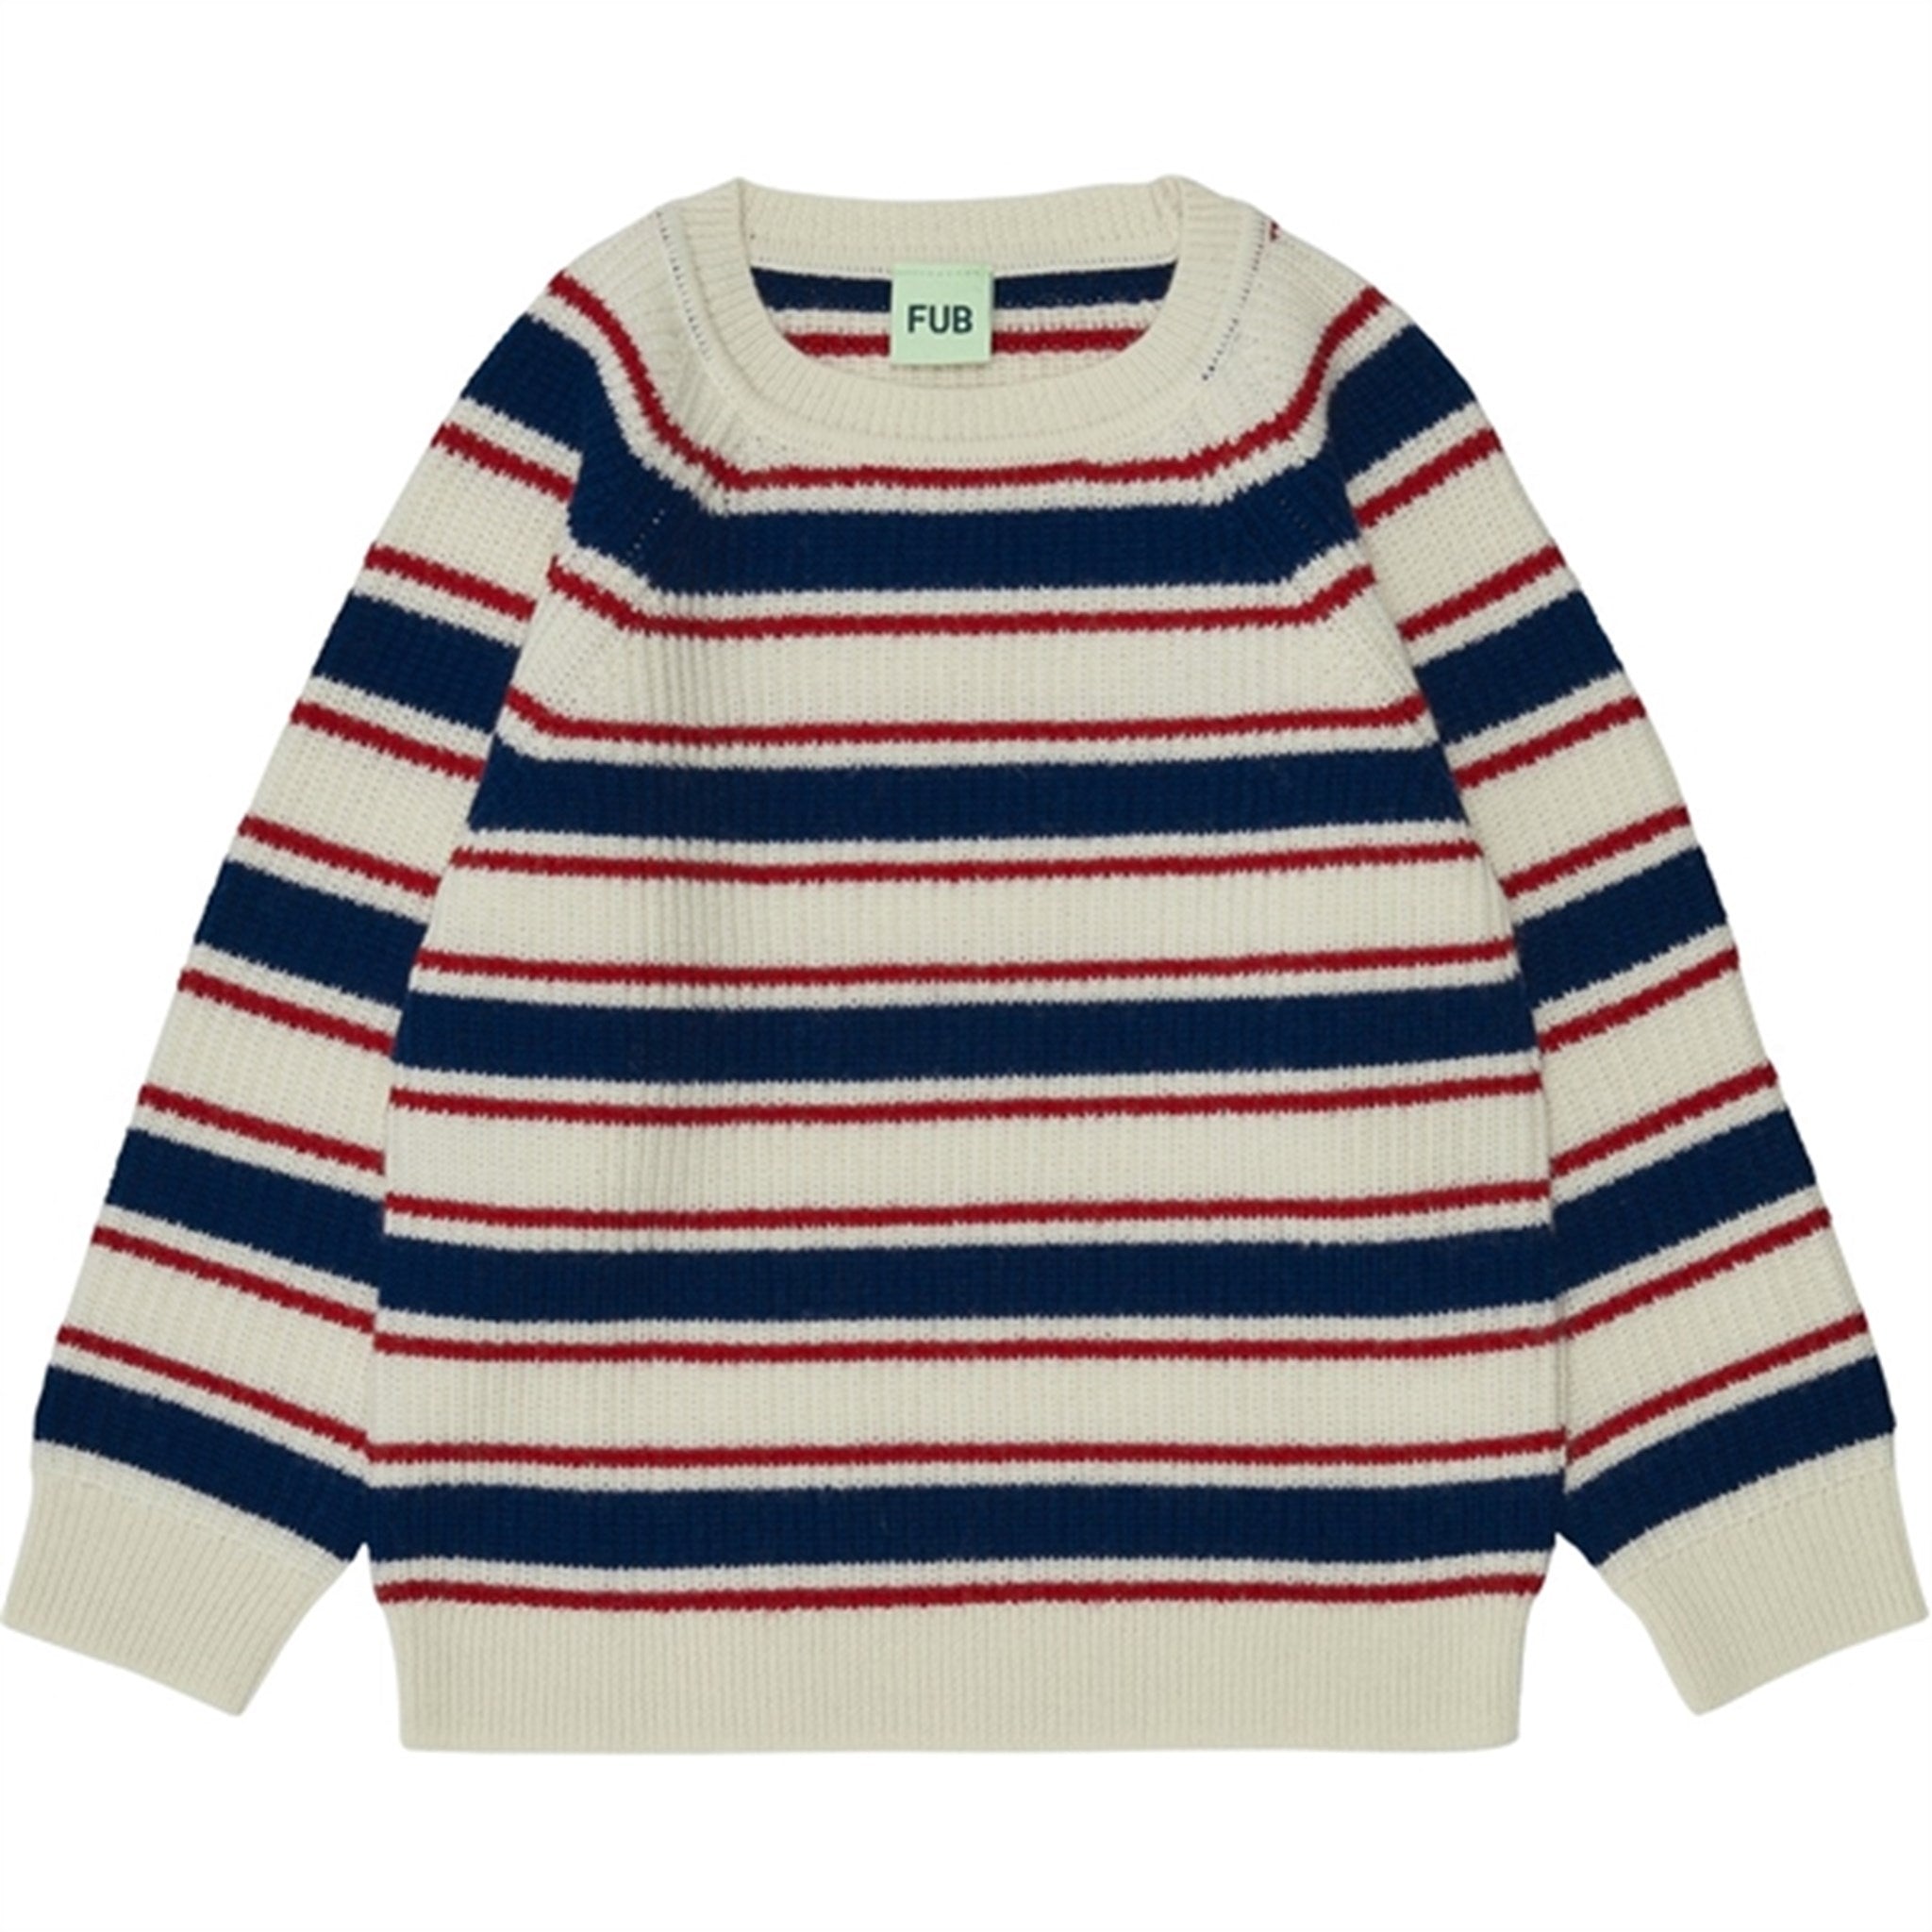 FUB Raglan Knitted Sweater Ecru/Royal Blue/Bright Red